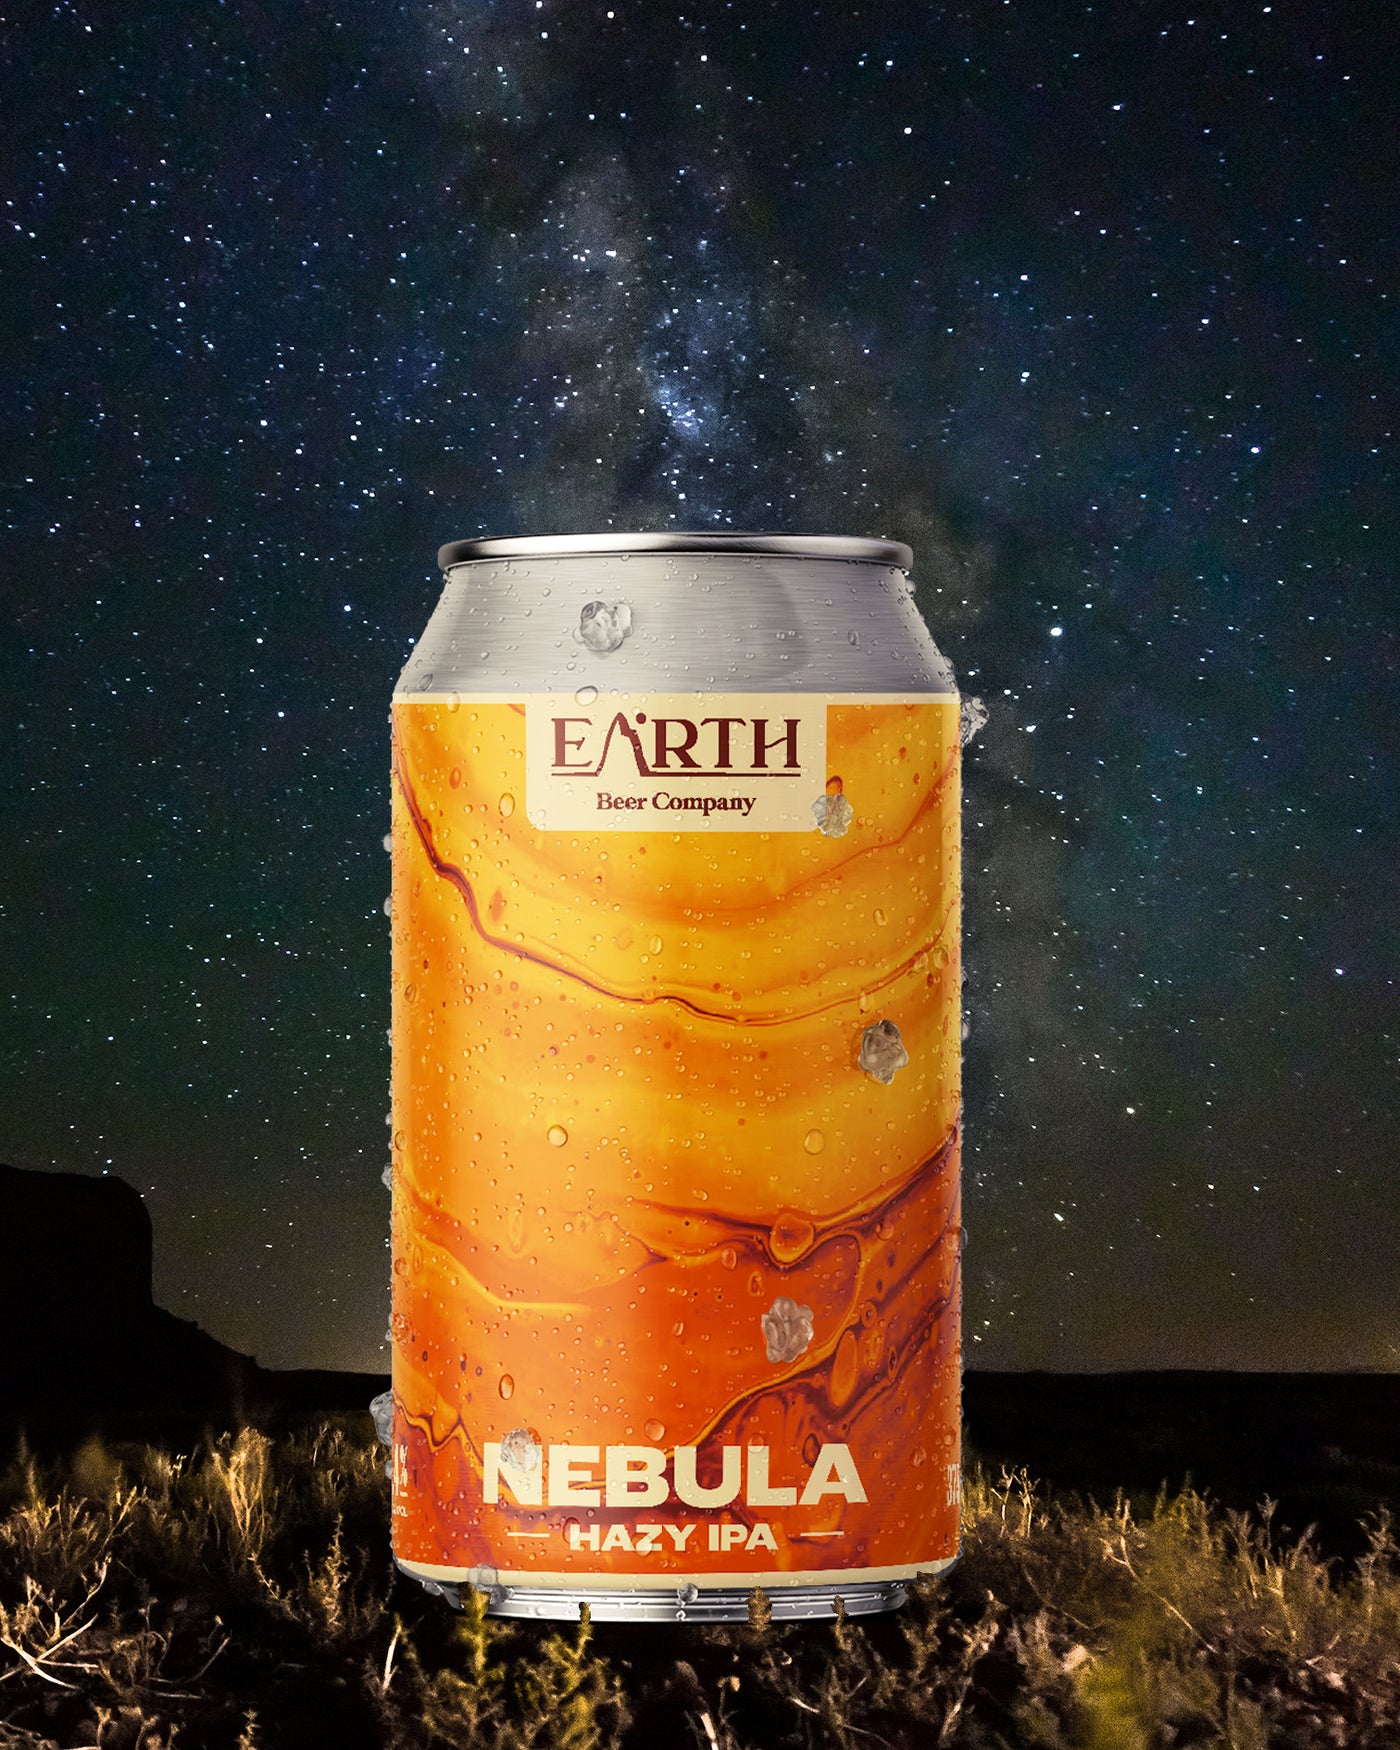 Nebula IPA 6.4%: The Range Beyond